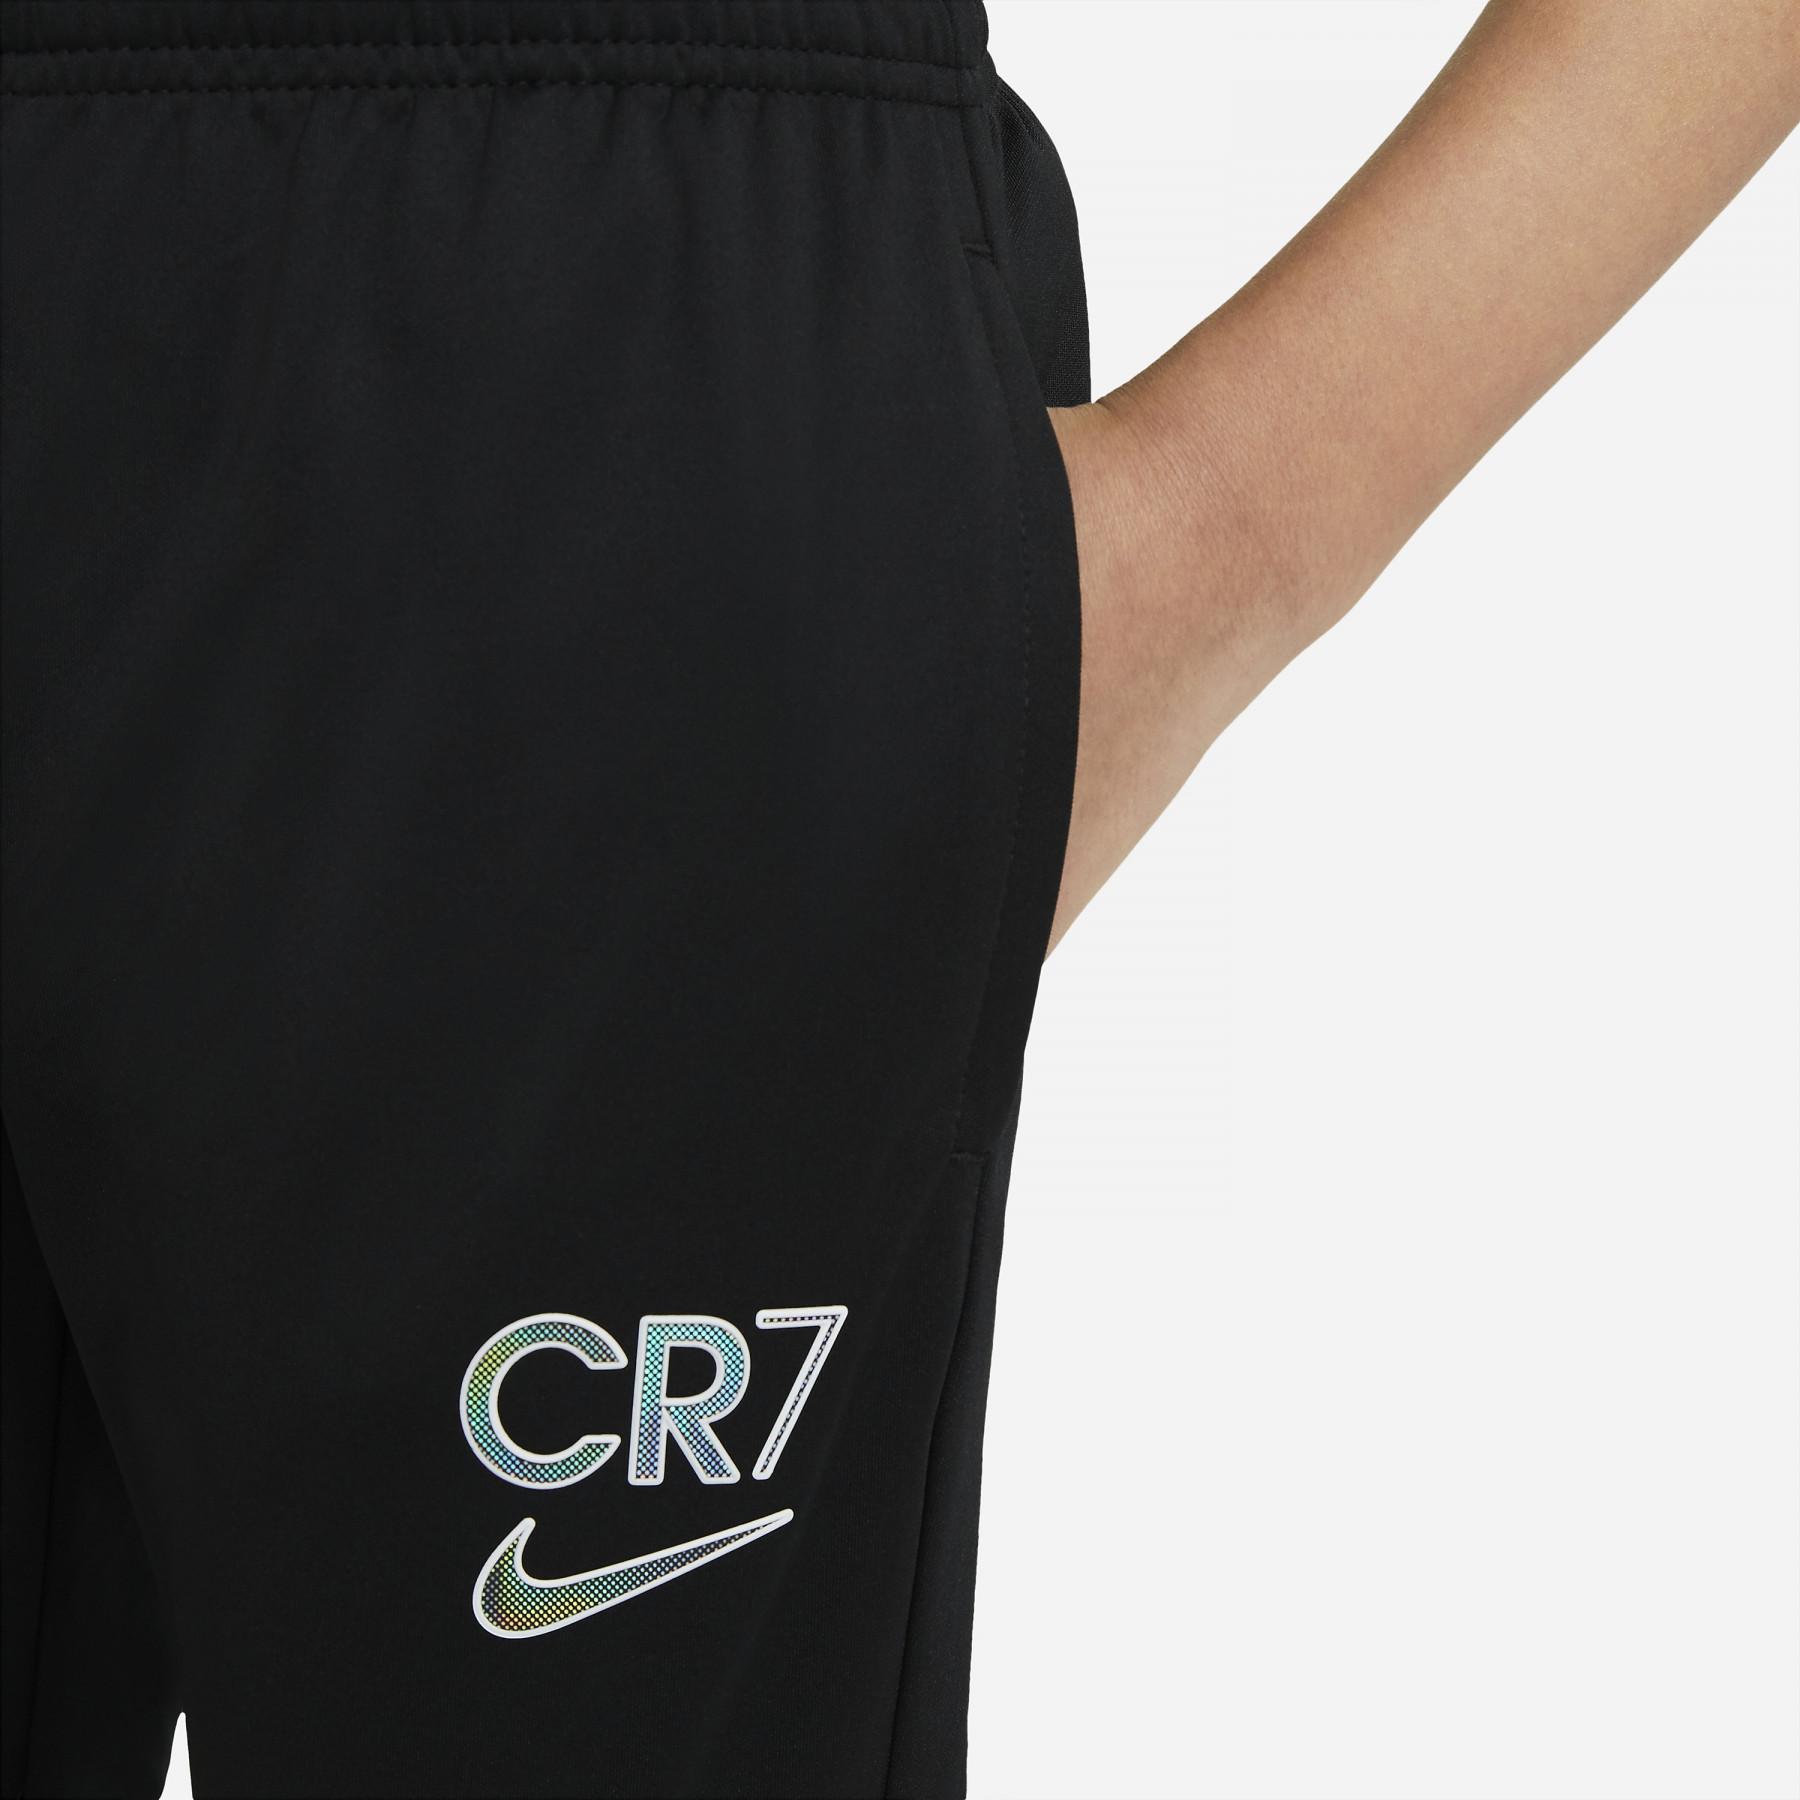 Children's trousers Nike Dri-FIT CR7